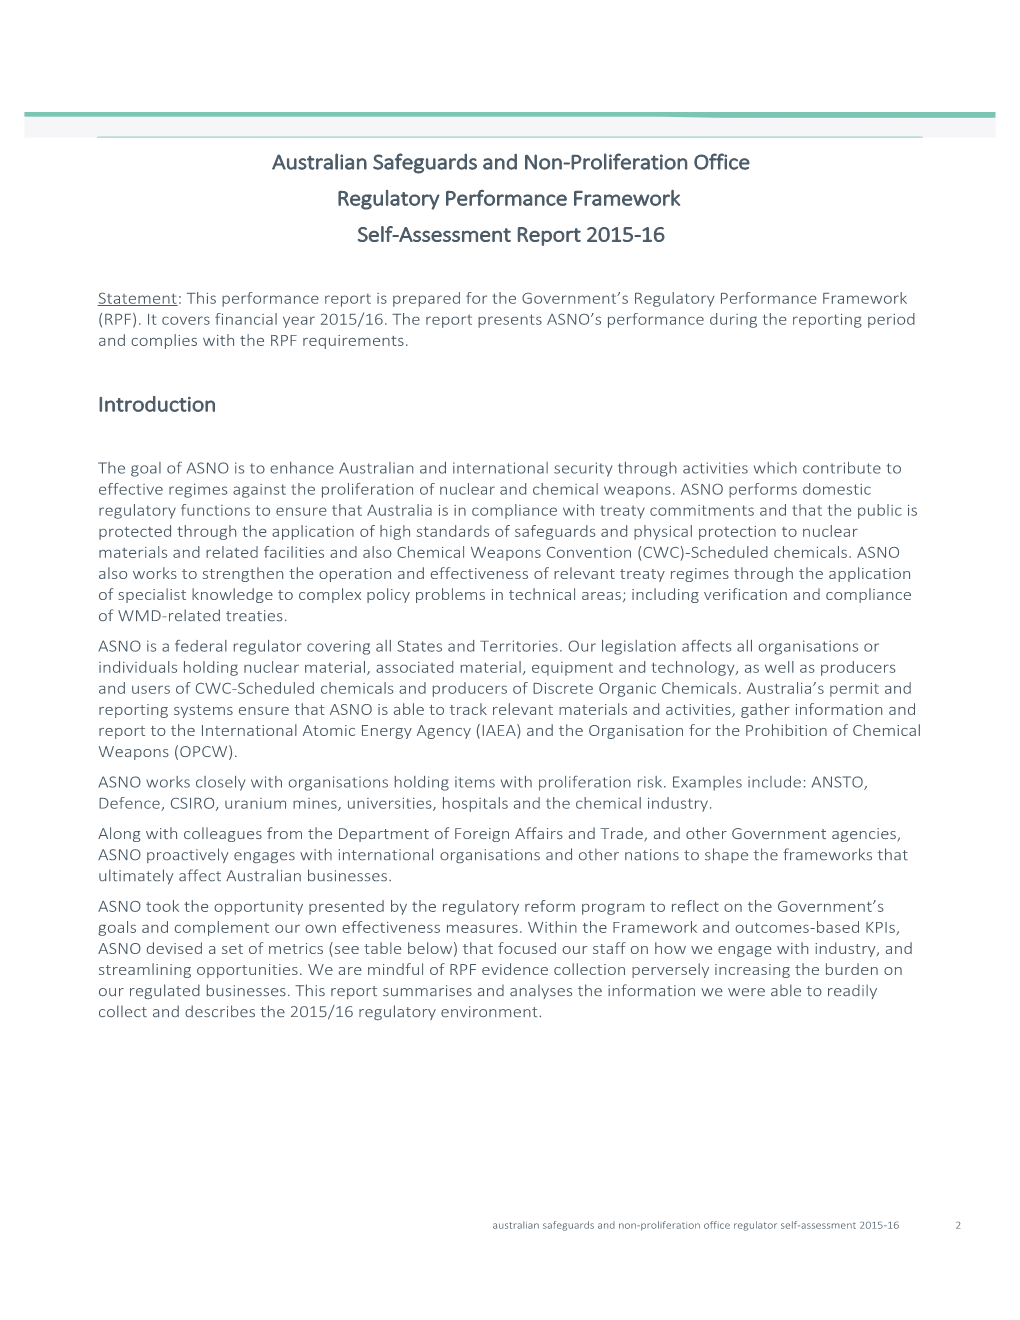 Australian Safeguards and Non-Proliferation Office Regulator Self-Assessment 2015-16